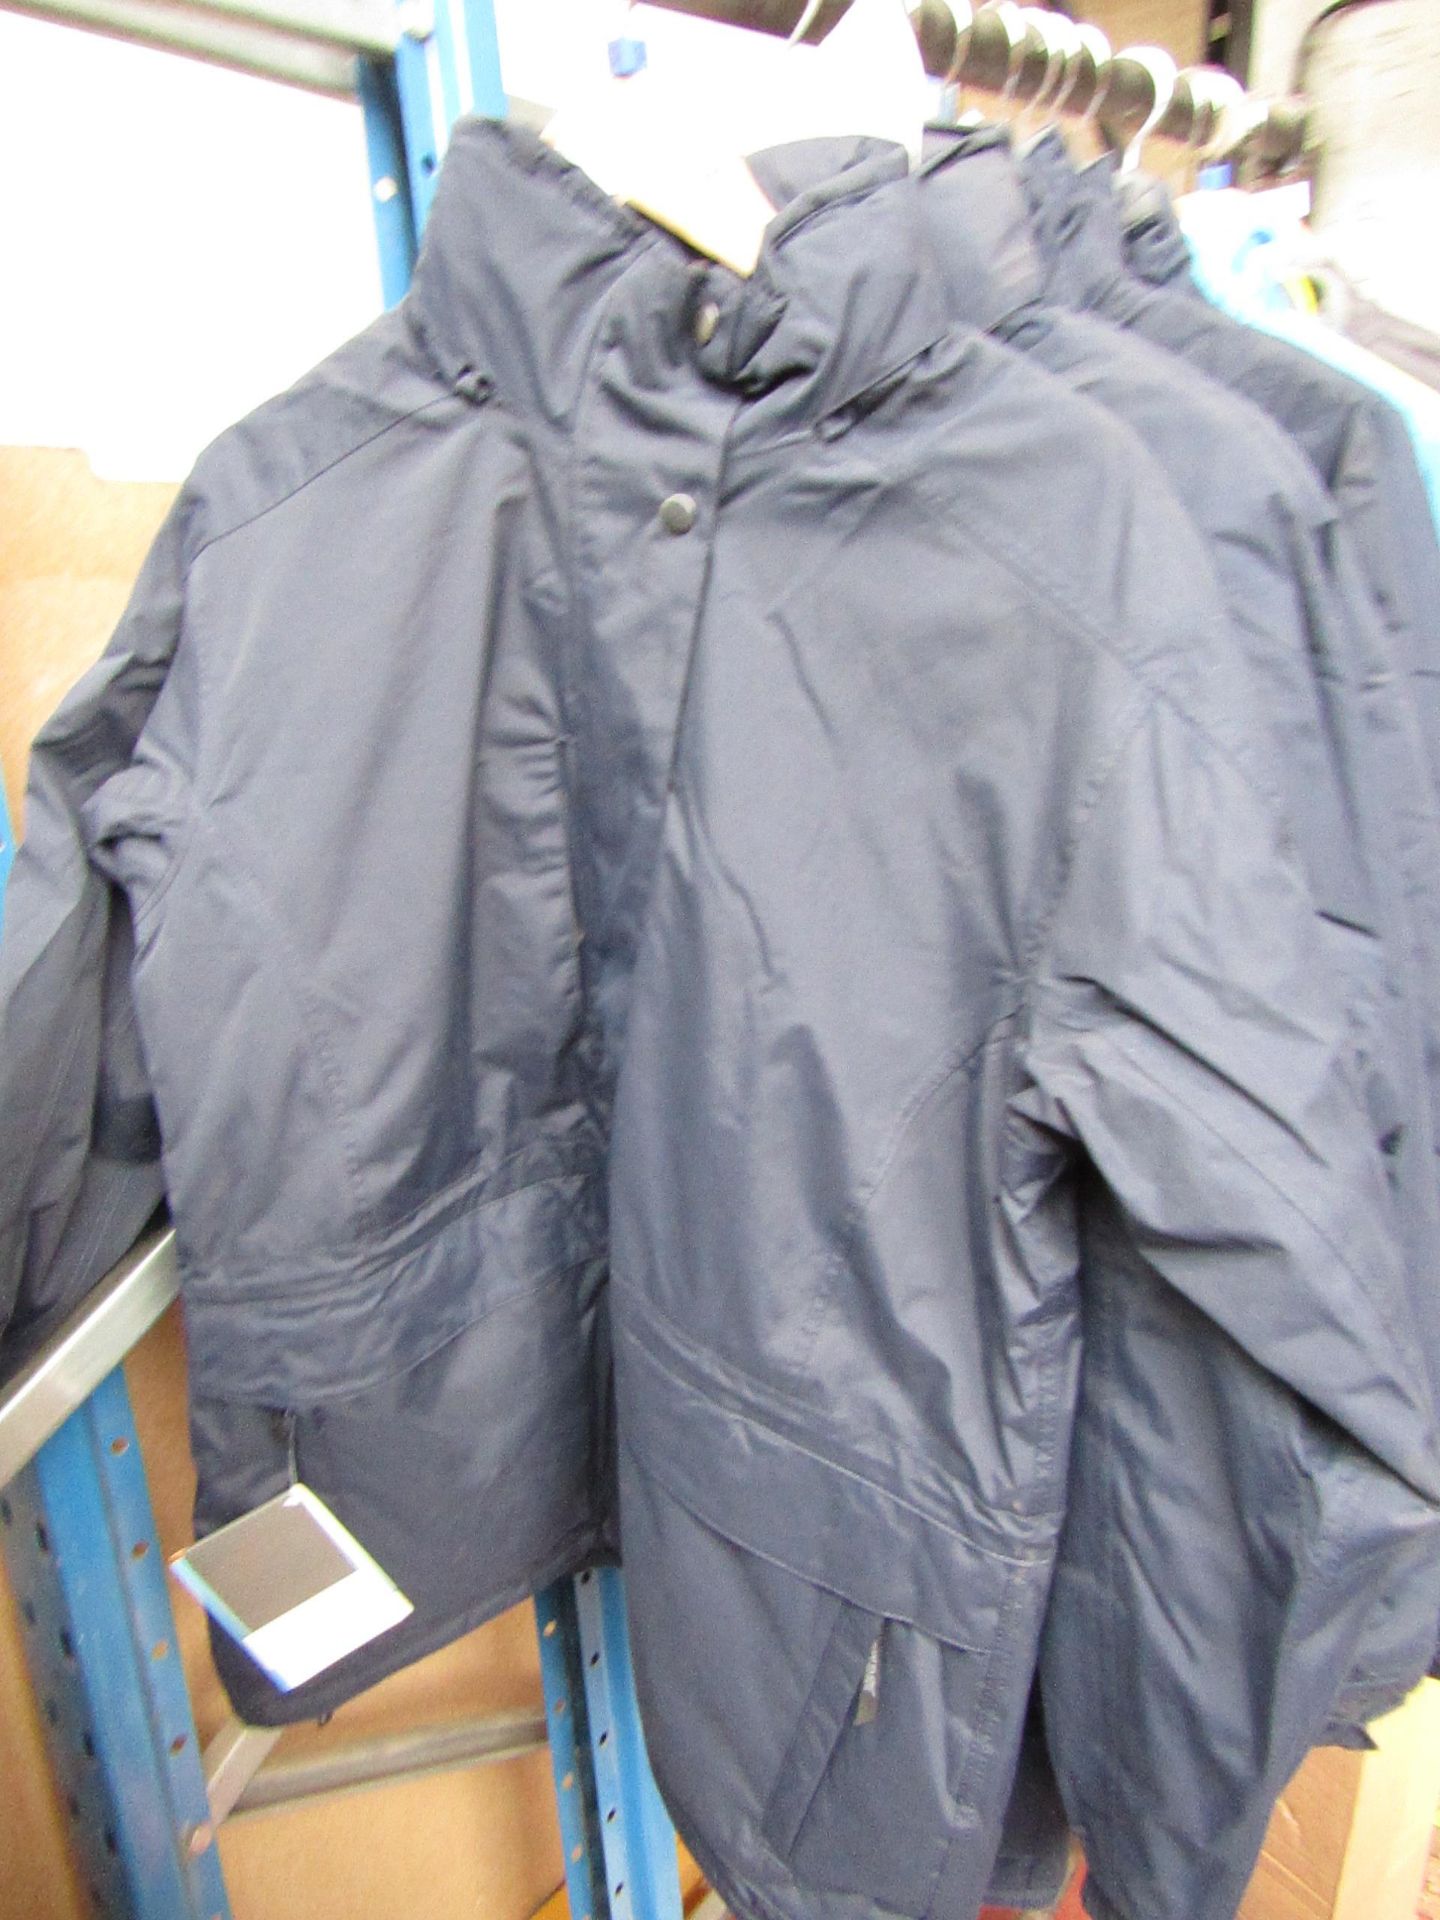 Regattas ladies weather resistant Jacket, new size 12